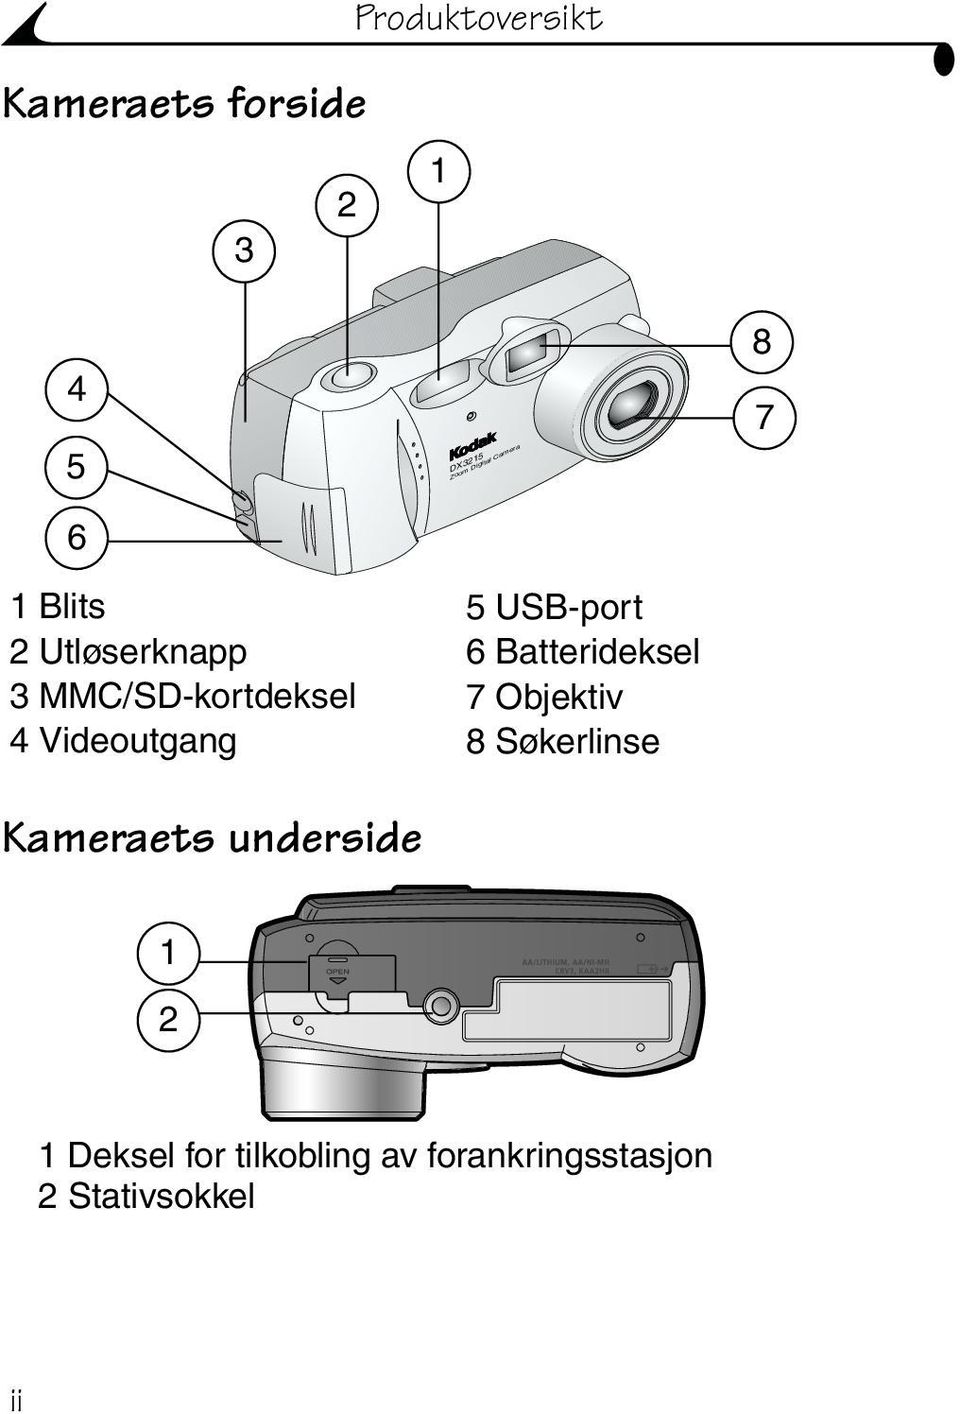 Kameraets underside 5USB-port 6 Batterideksel 7 Objektiv